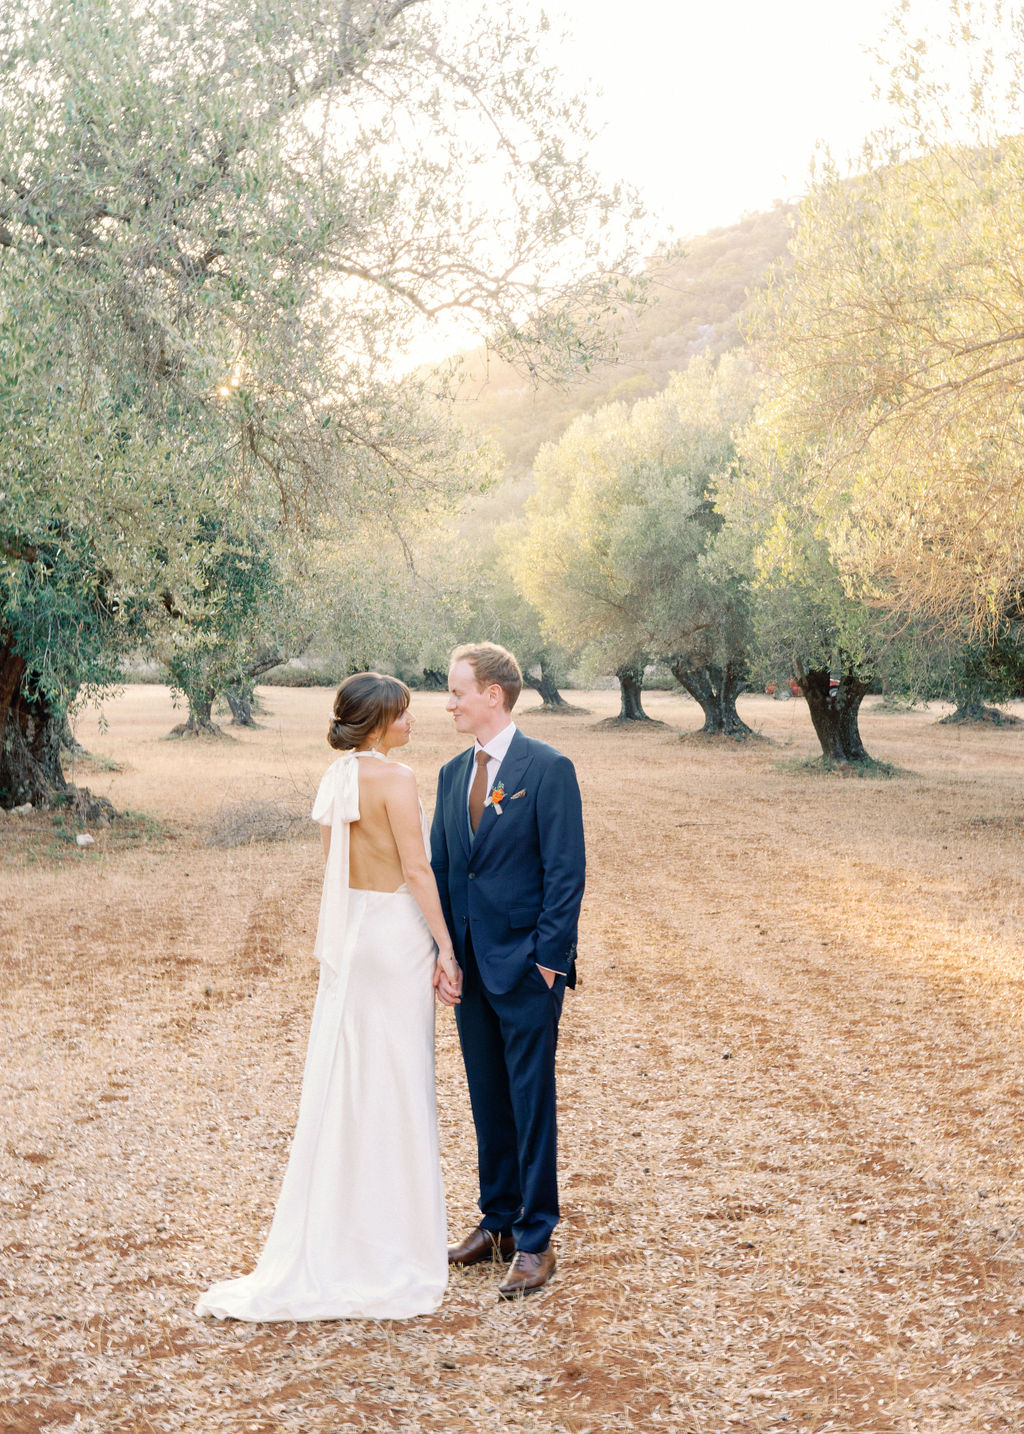 Olive Grove Wedding In Greece - Bride&Groom